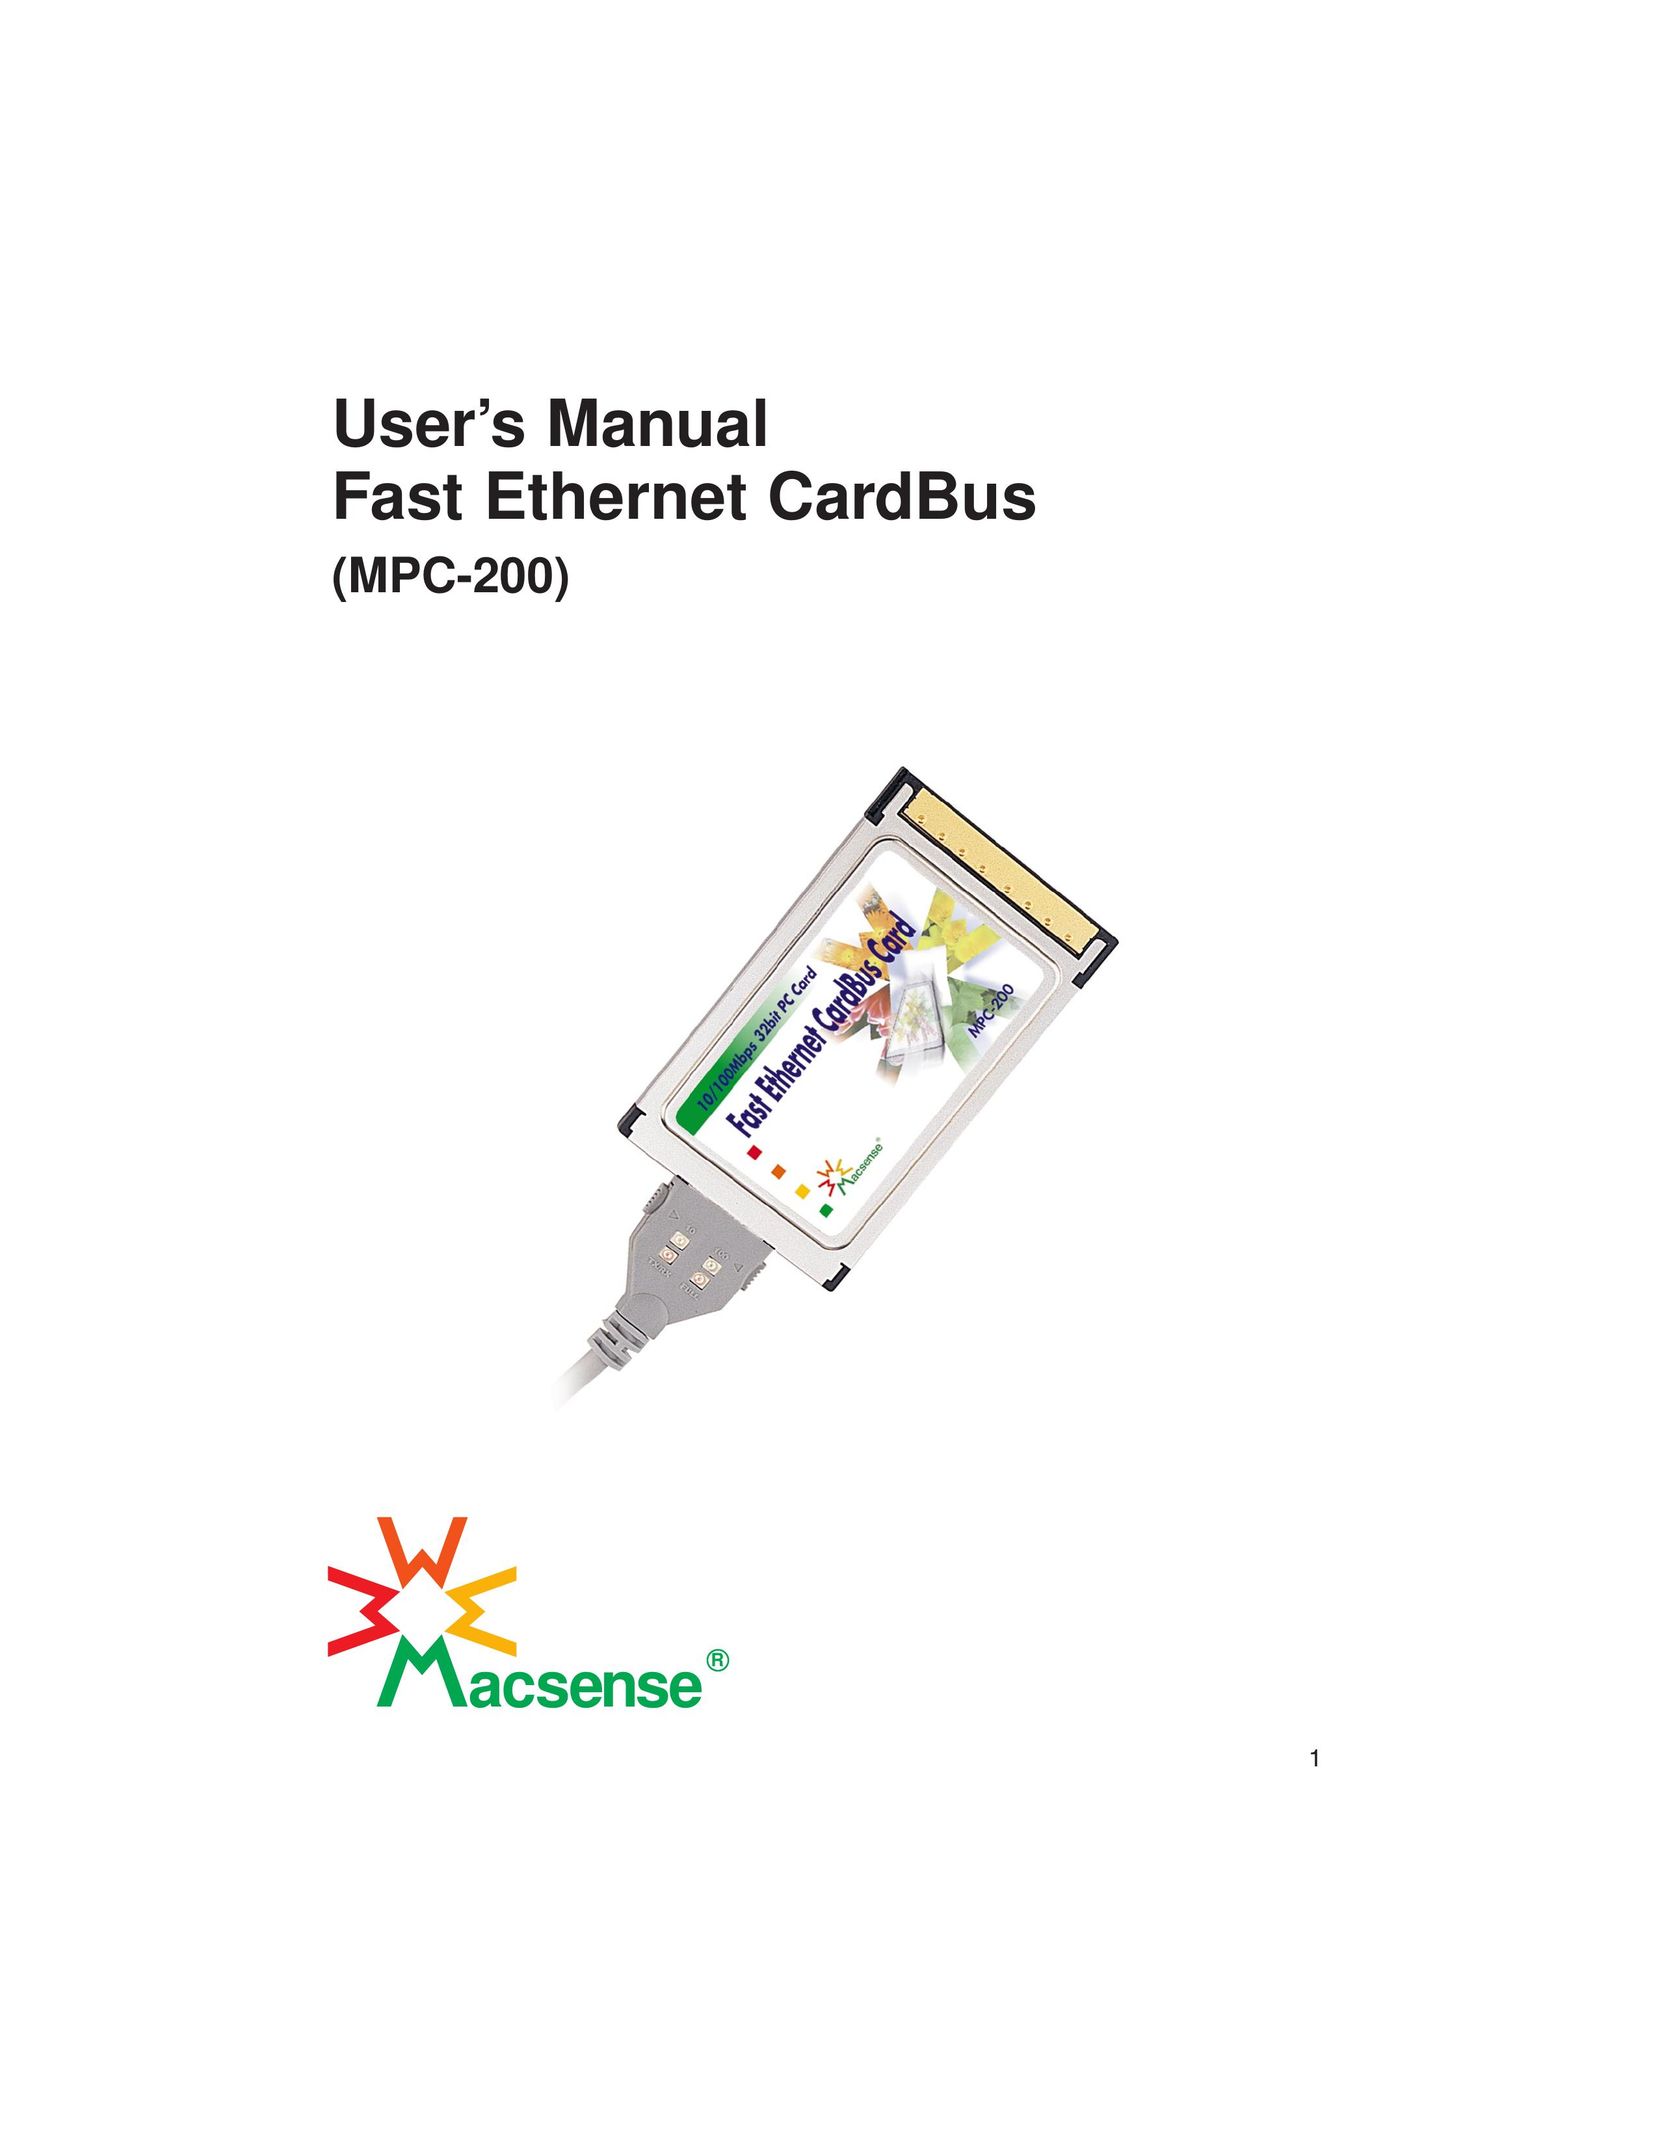 Macsense Connectivity MPC-200 Network Card User Manual